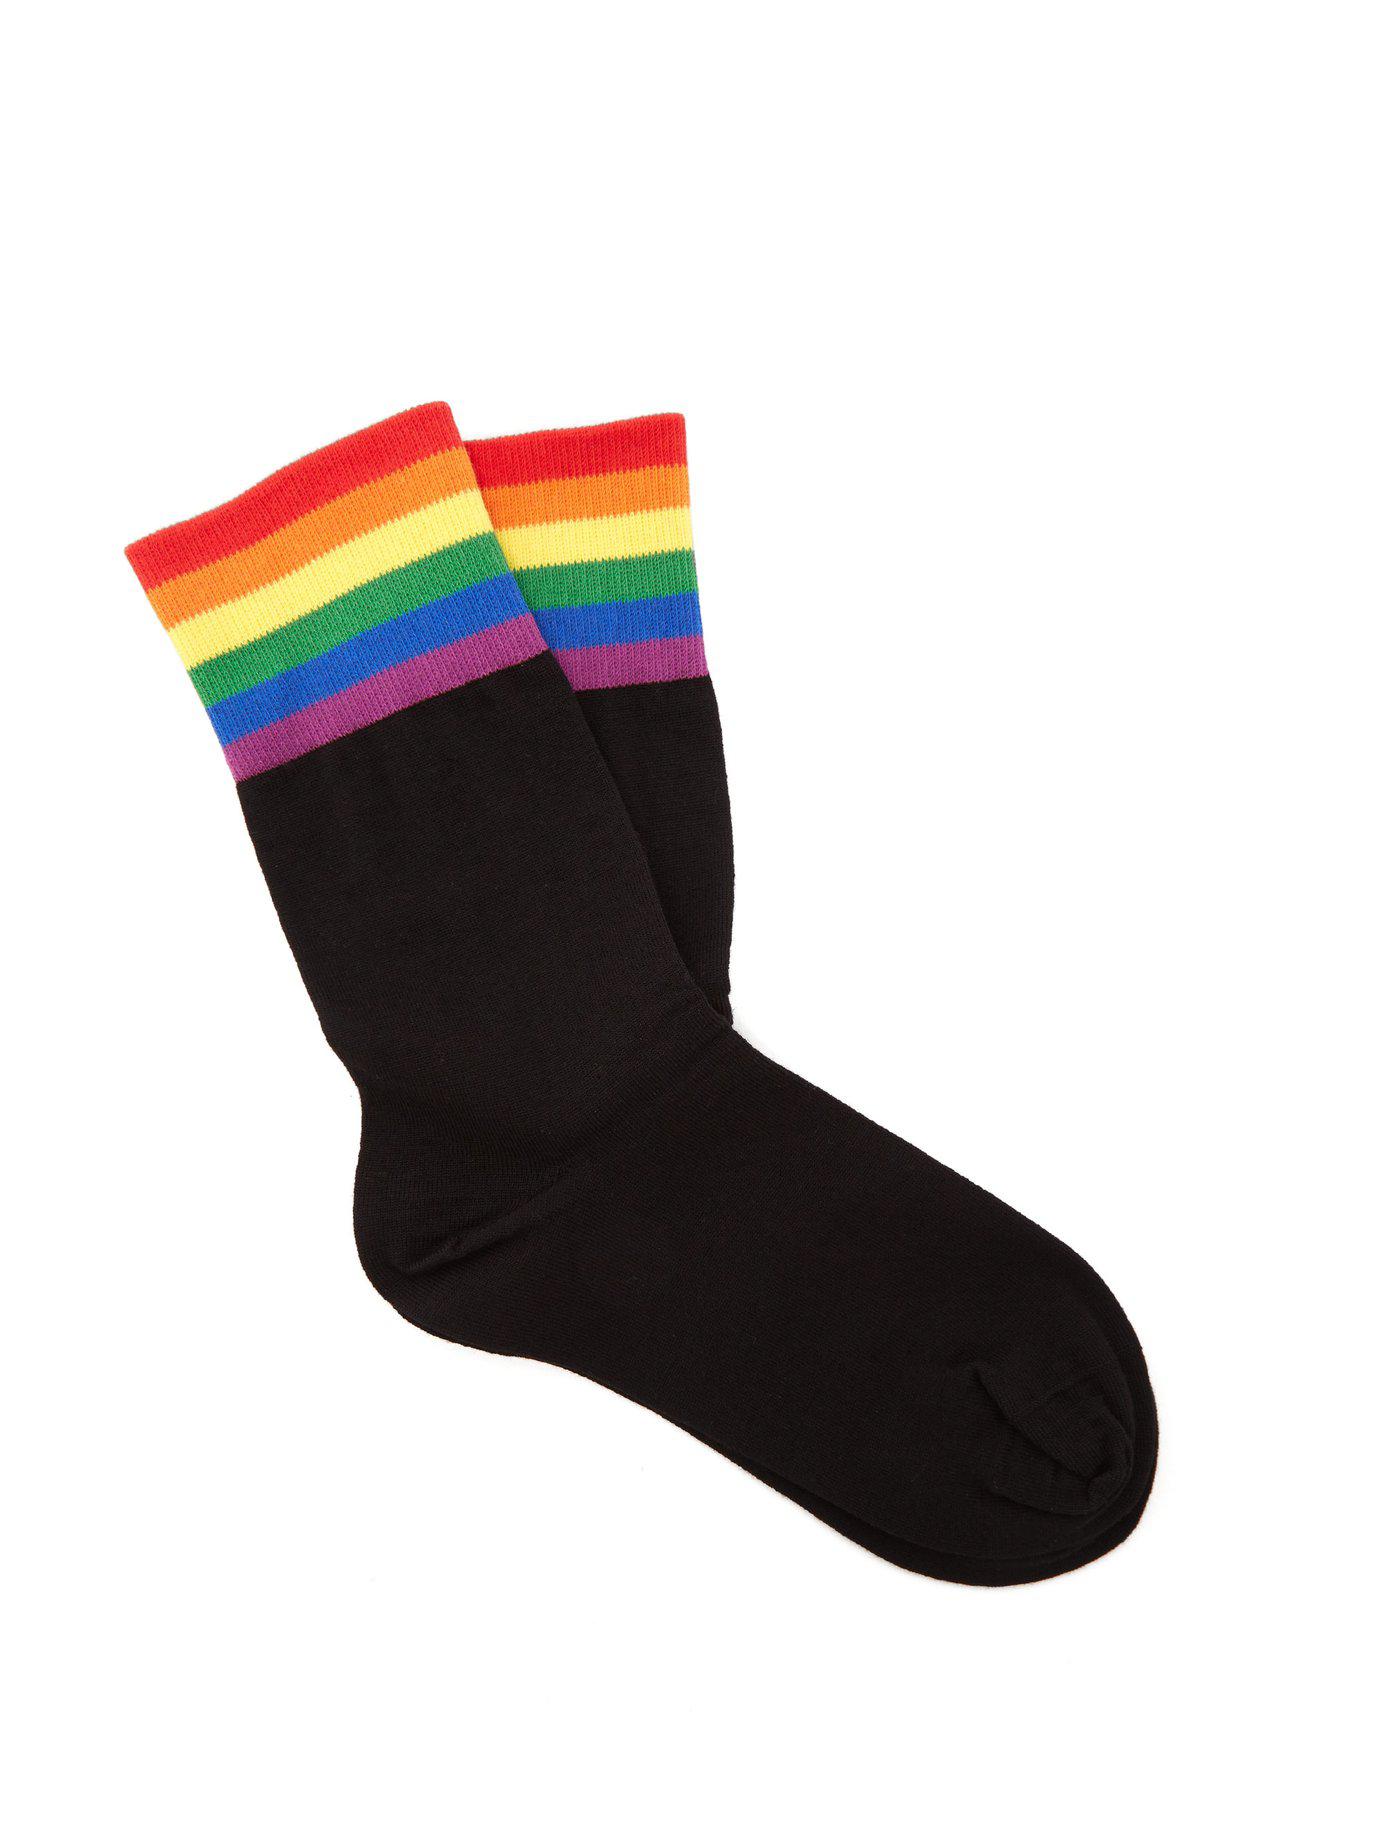 Burberry Rainbow Wool-blend Socks in 